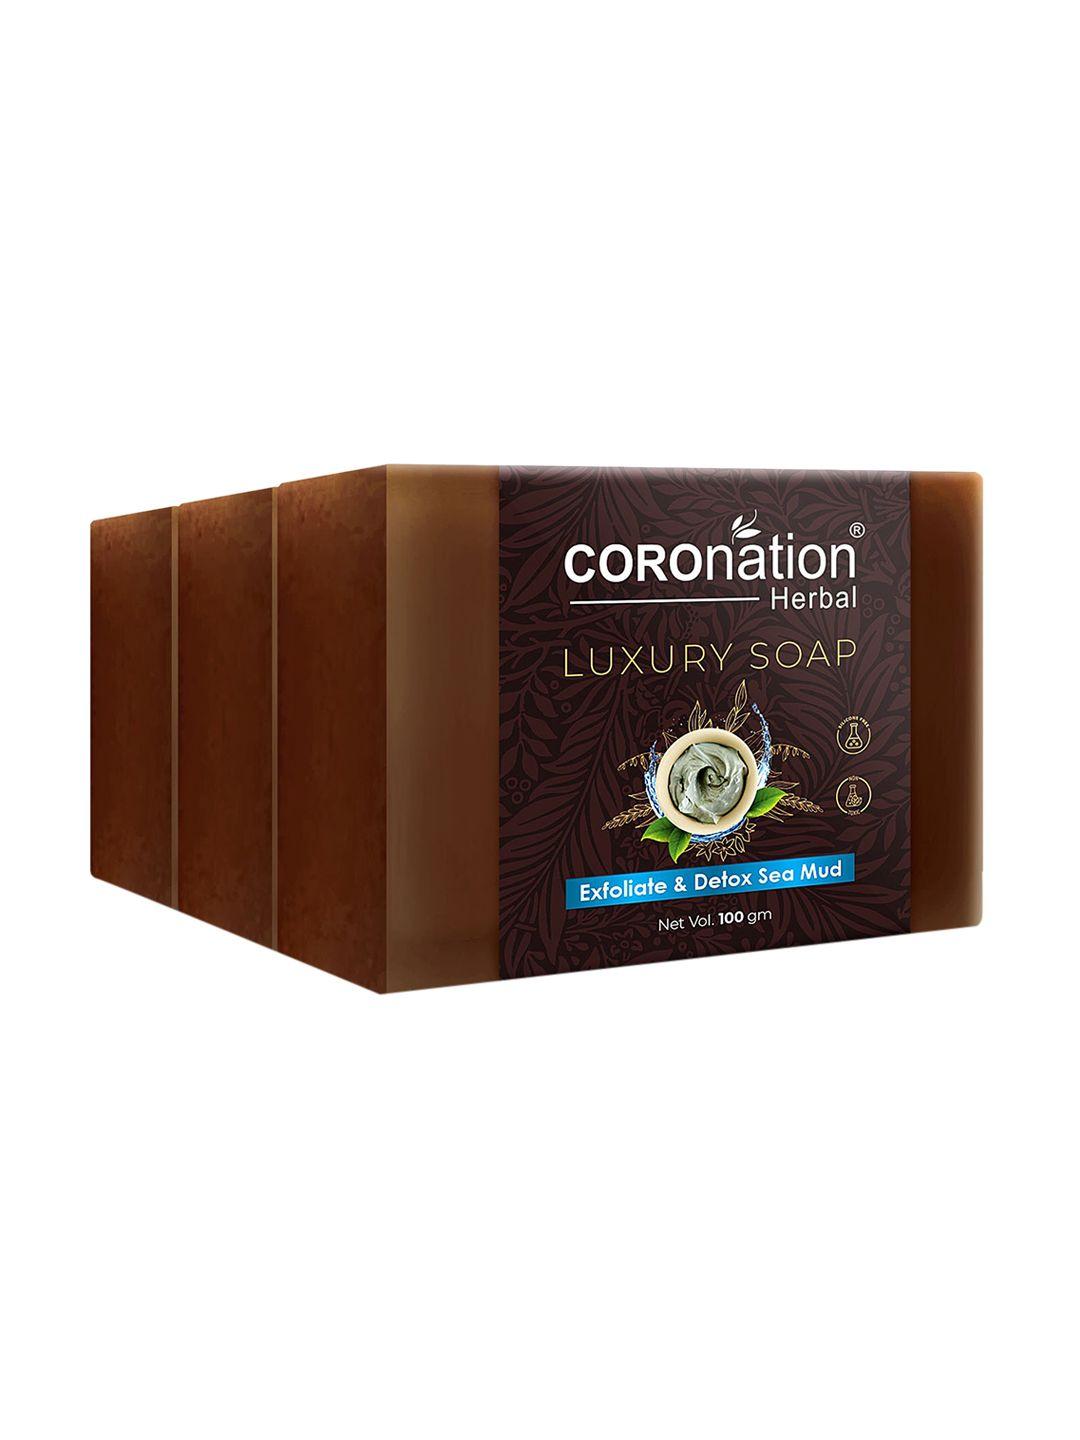 coronation herbal set of 3 exfoliate & detox sea mud luxury soaps - 100g each